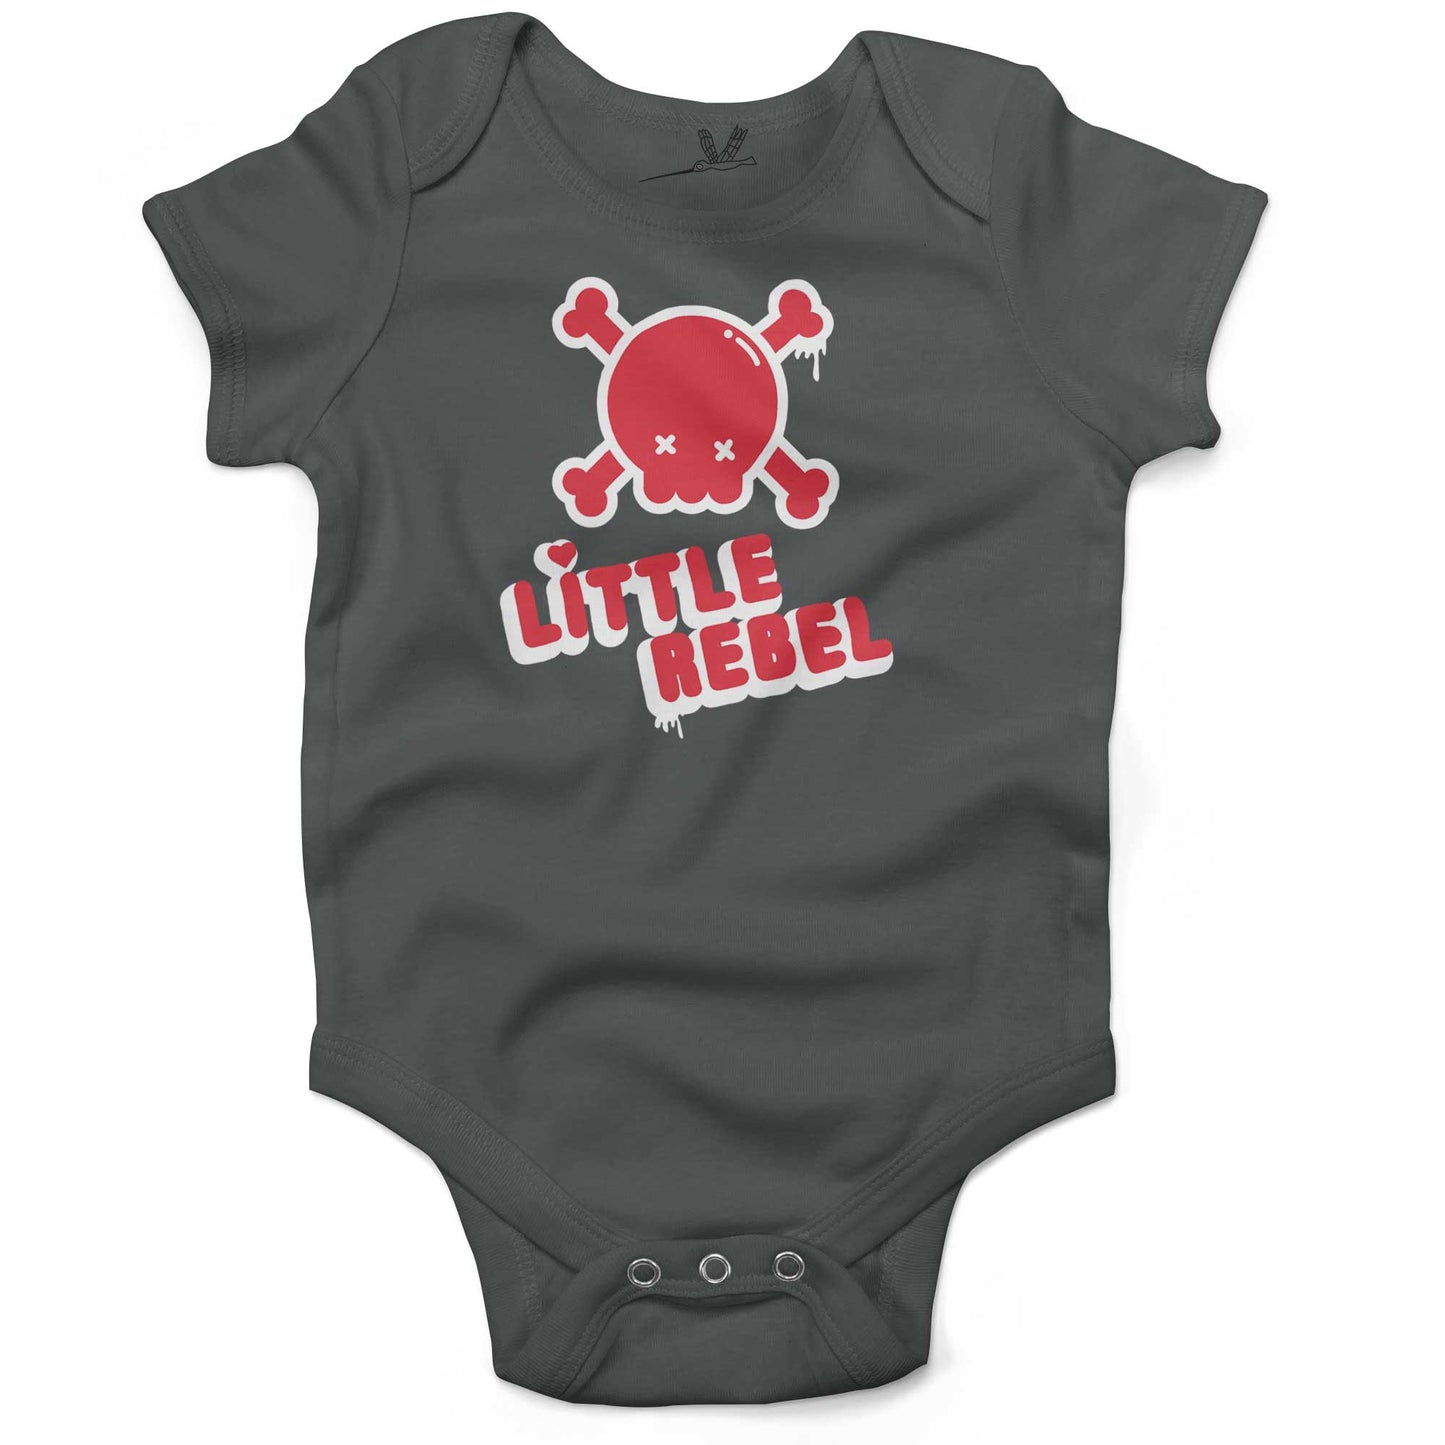 Little Rebel Infant Bodysuit or Raglan Baby Tee-Organic Asphalt-3-6 months